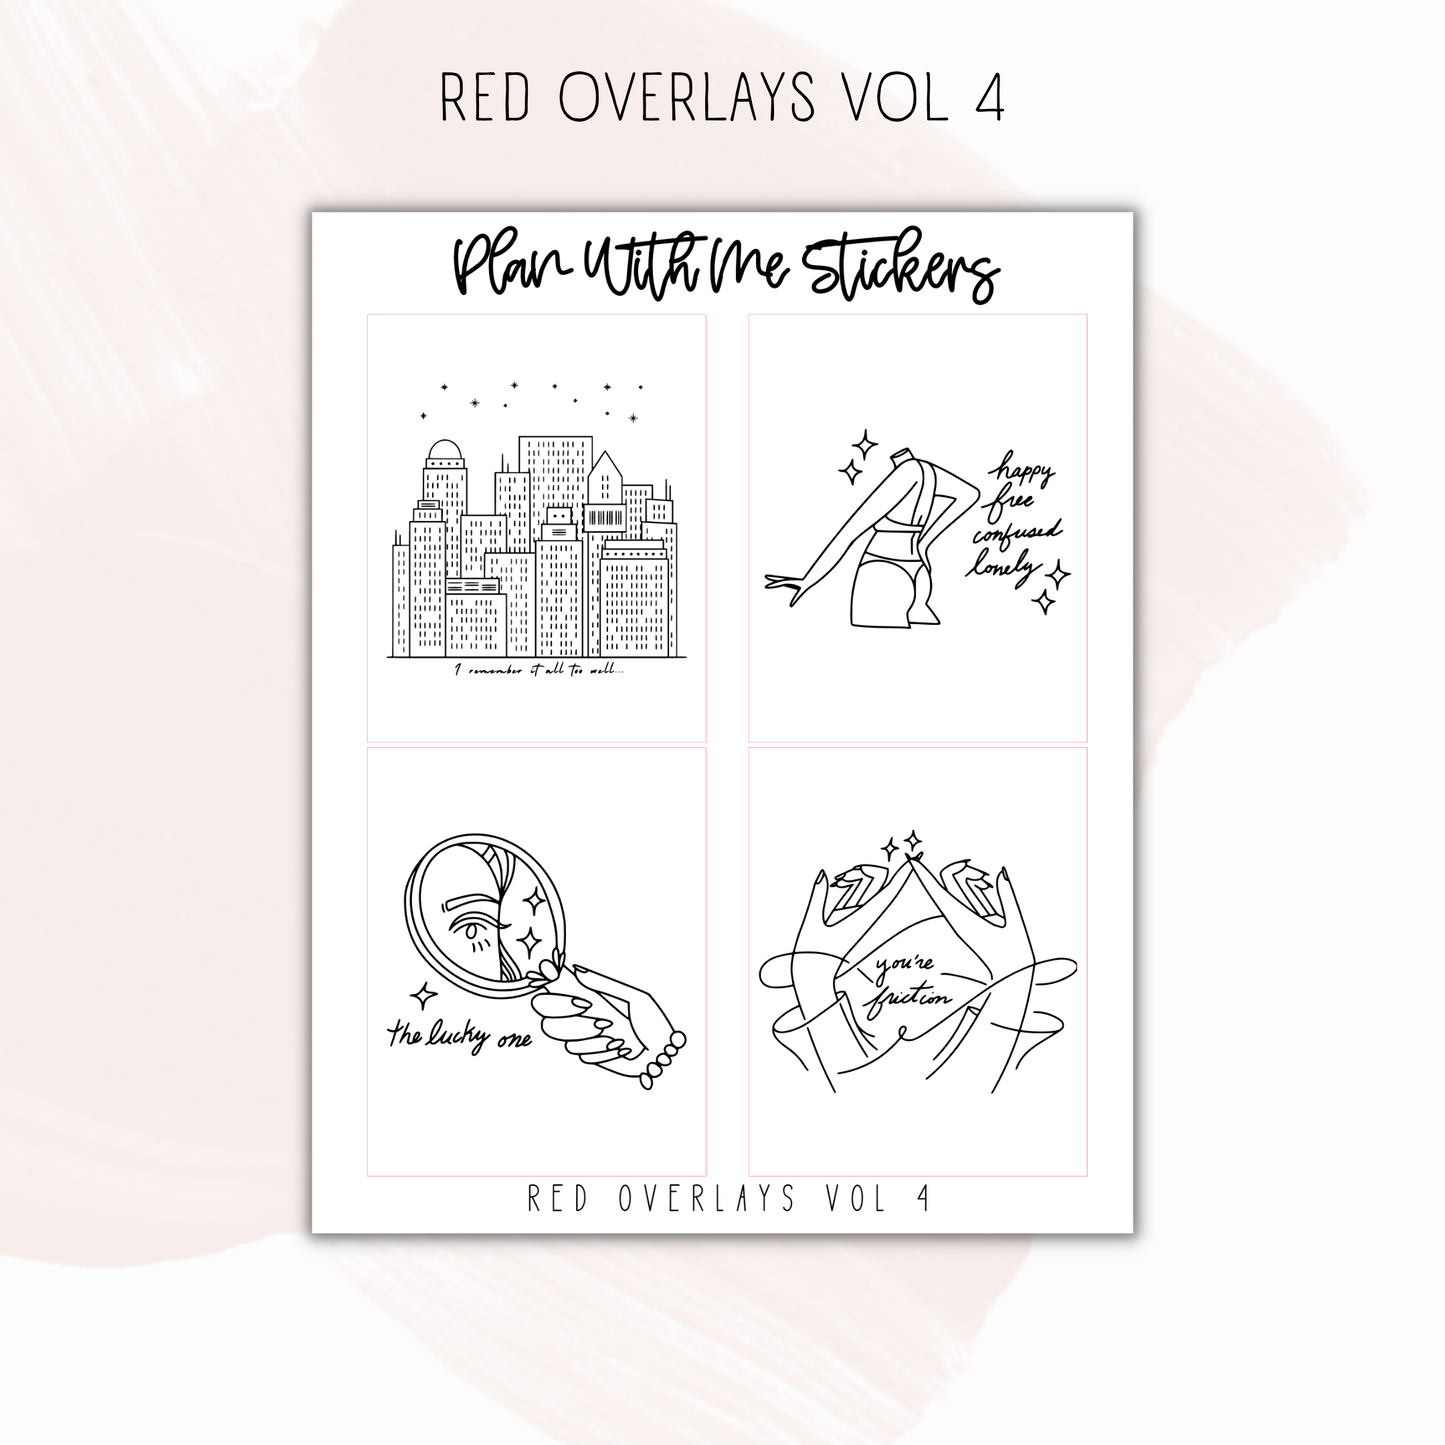 Red Overlays Vol 4